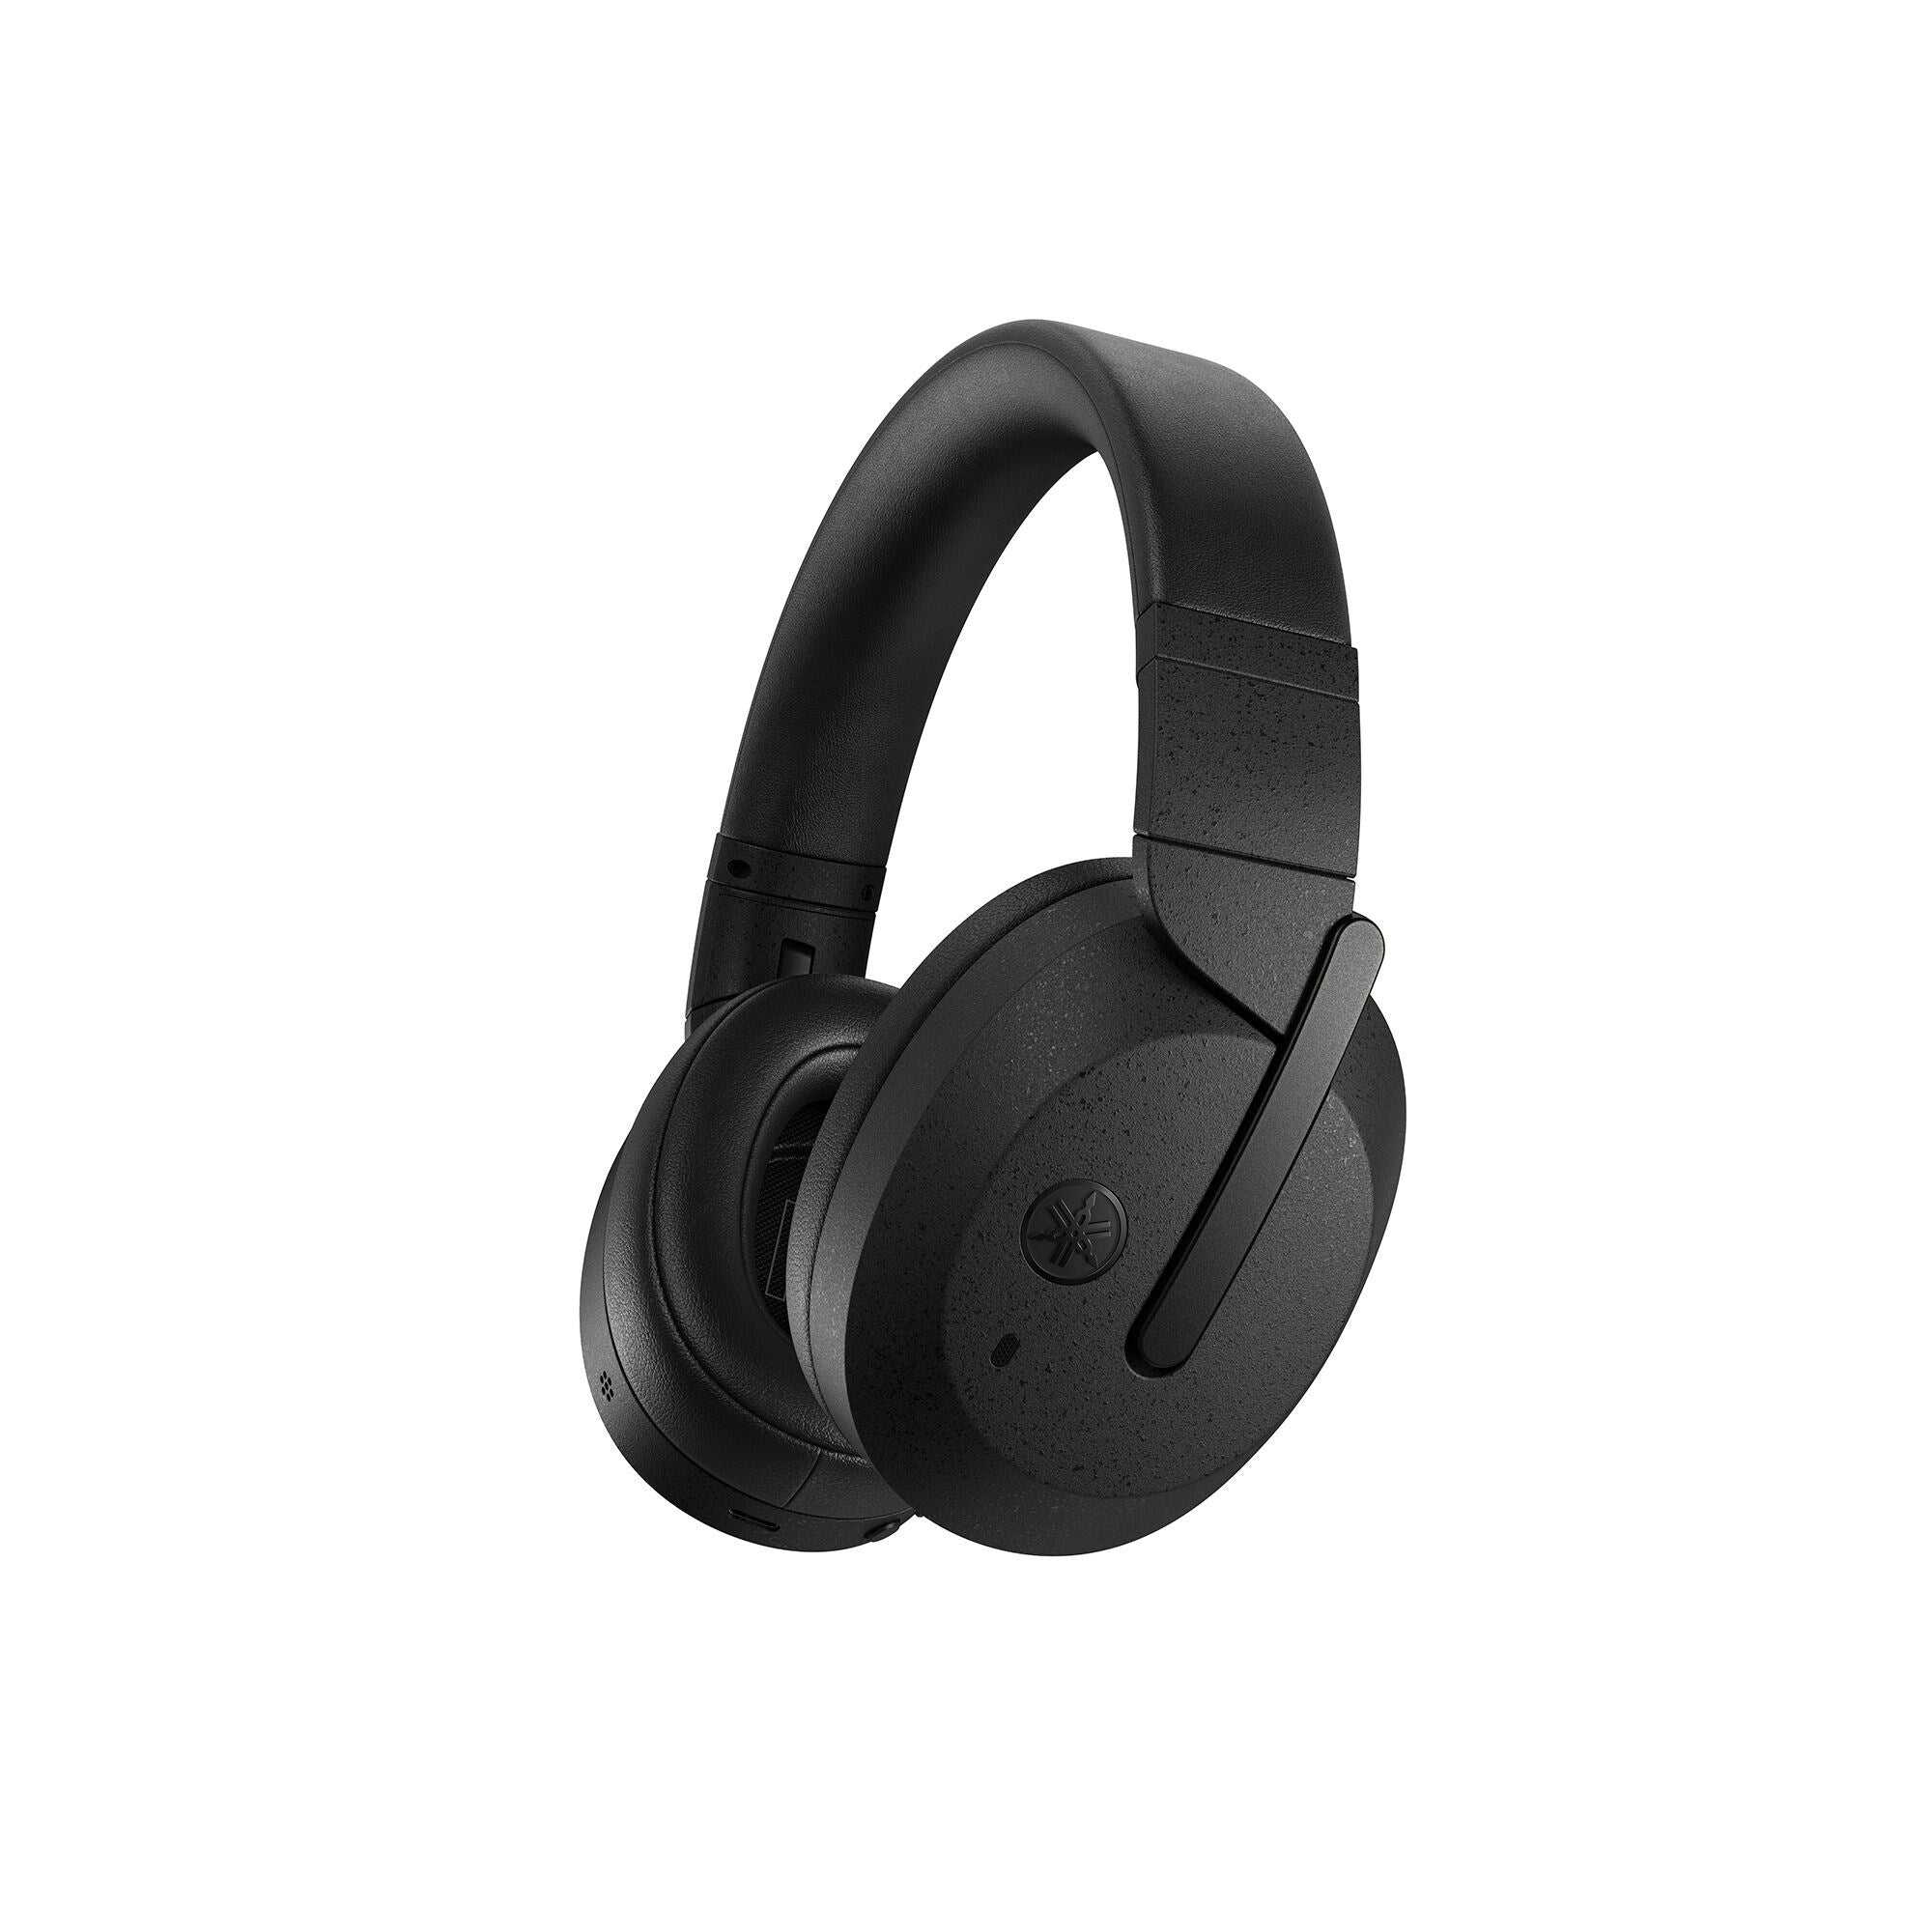 Yamaha YH-E700B noise canceling headphones